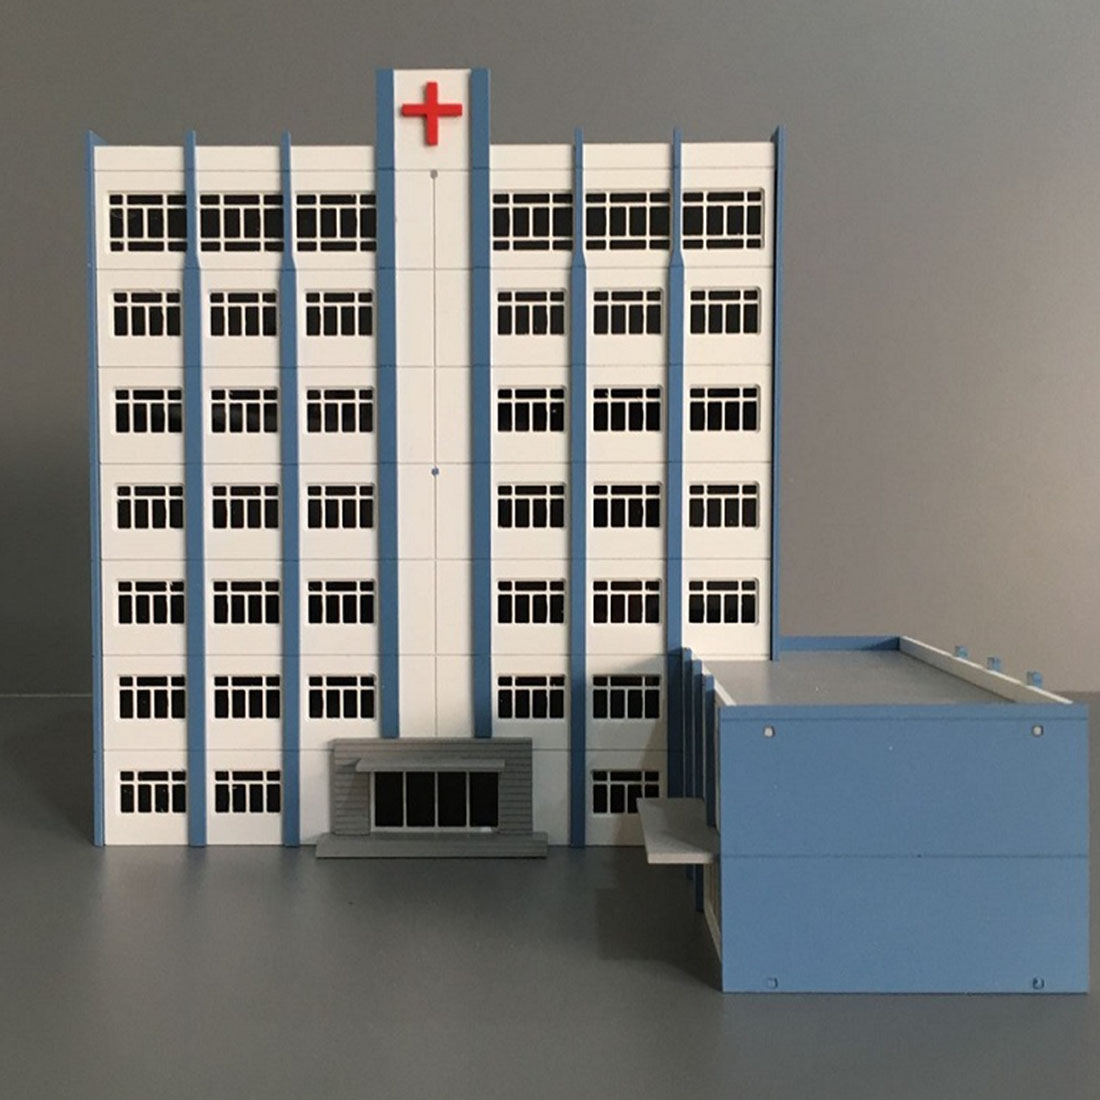 25 X 16 X 2cm 1:150 N Scale Sand Table Decoration DIY Assembly Model Hospital Building Ho Scale Miniatures Landscape